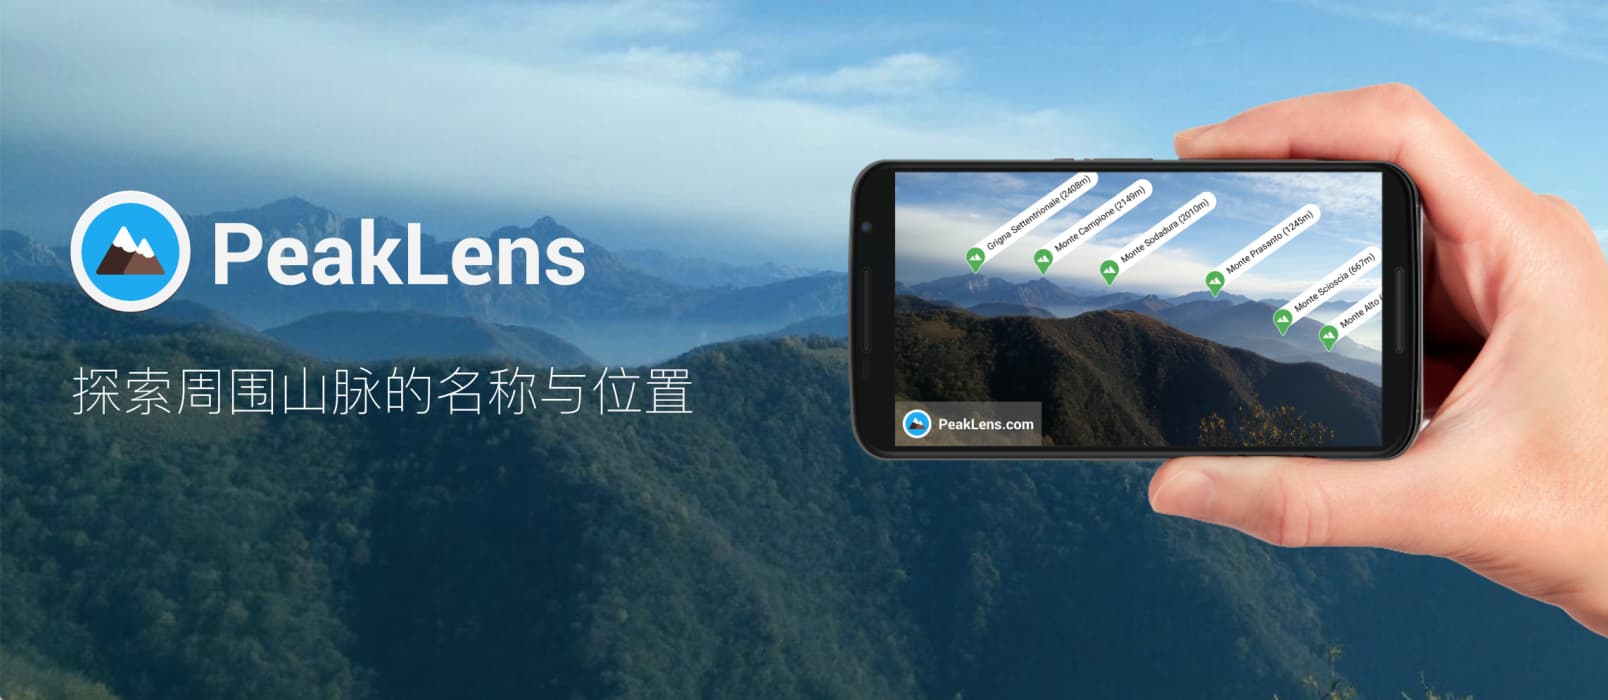 PeakLens - 实时准确识别山峰和山丘[Android] 1